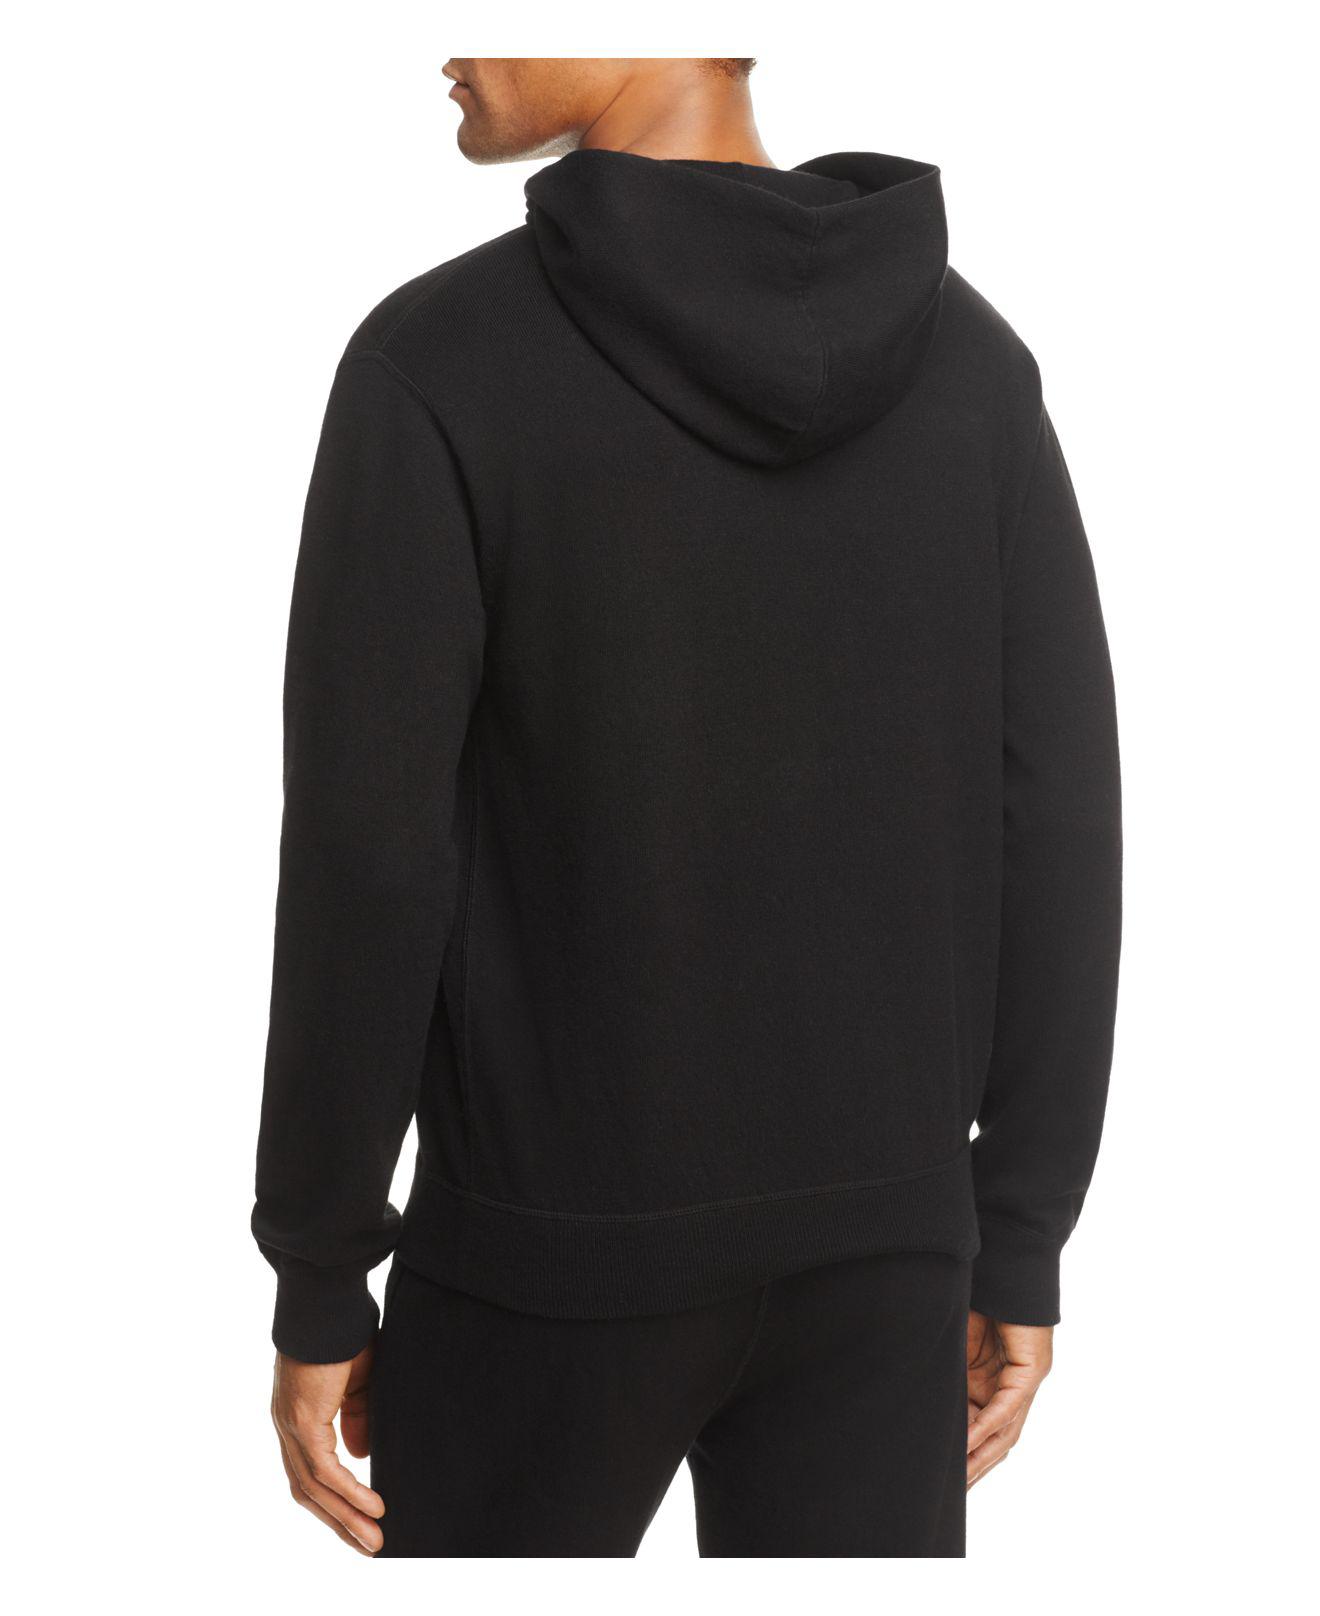 Lyst - Vince Hooded Sweatshirt in Black for Men